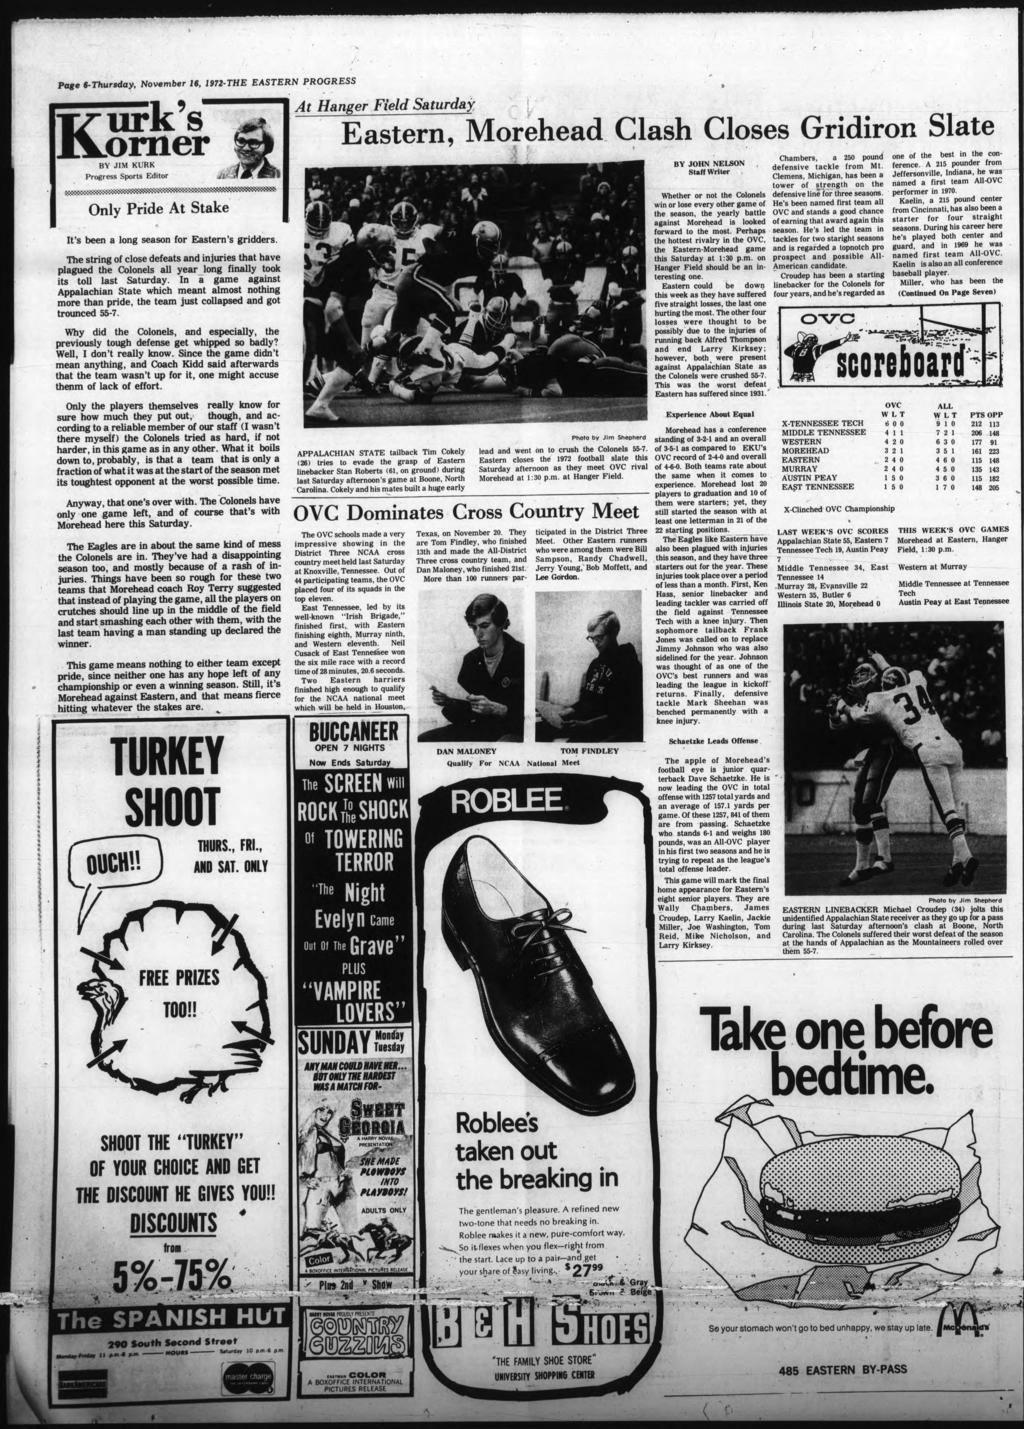 Page 6-Thursday, November 16, 1972-THE EASTERN PROGRESS At Hanger Feld Saturday Eastern, Morehead Clash Closes Grdron Slate BY JM KURK Progress Sports Edtor Jt lupfflmfflffl, N " wnn mn-